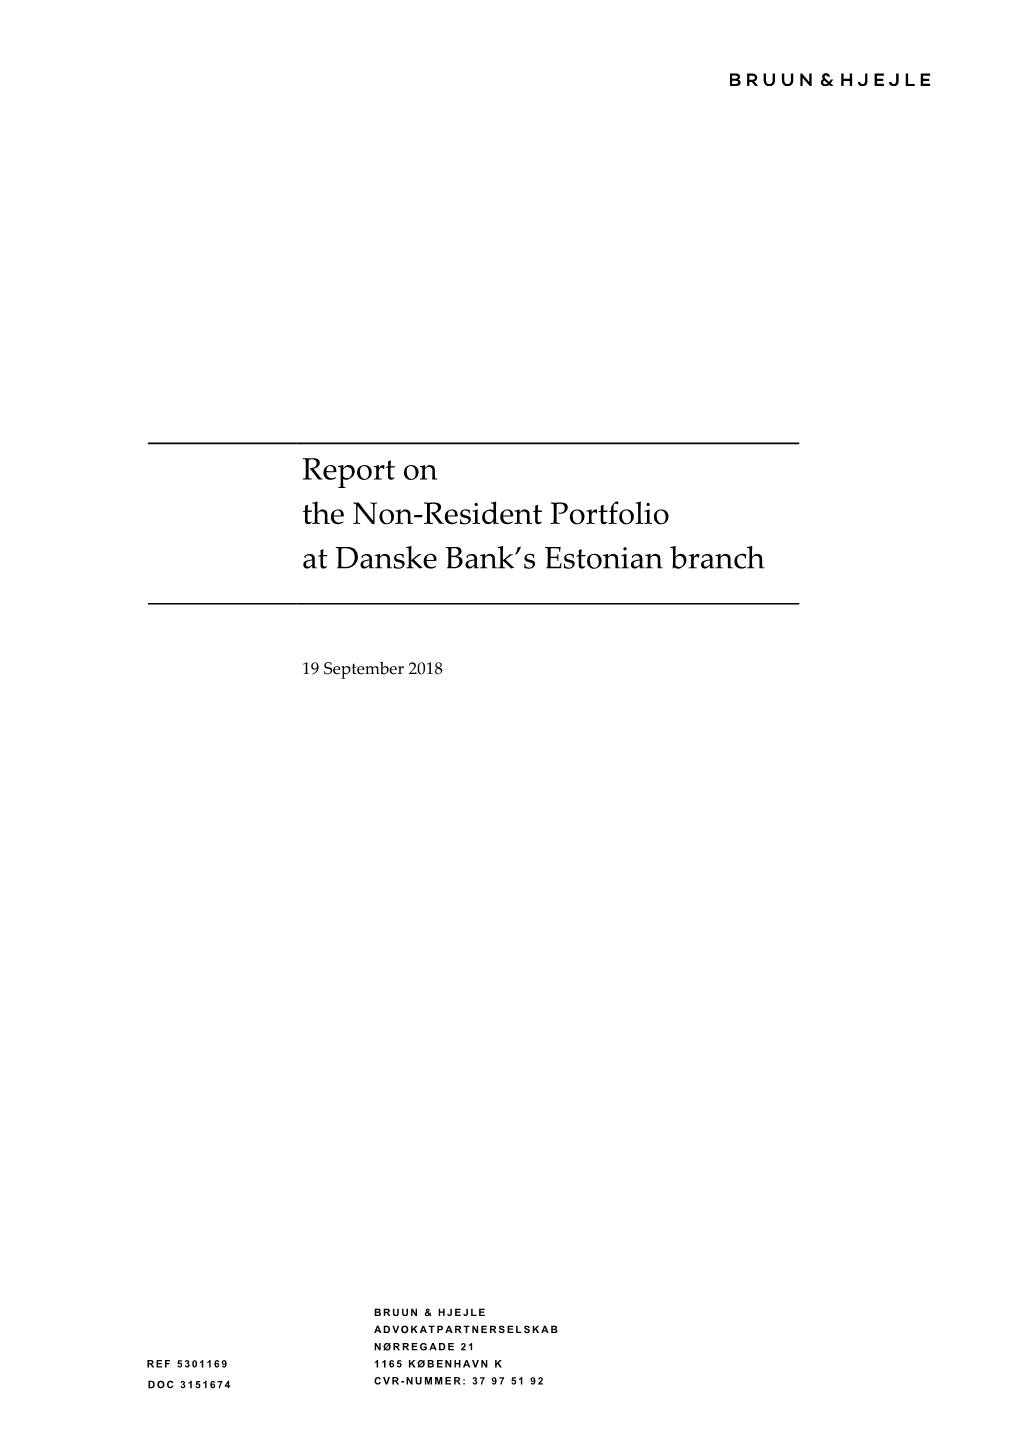 Report on the Non-Resident Portfolio at Danske Bank's Estonian Branch